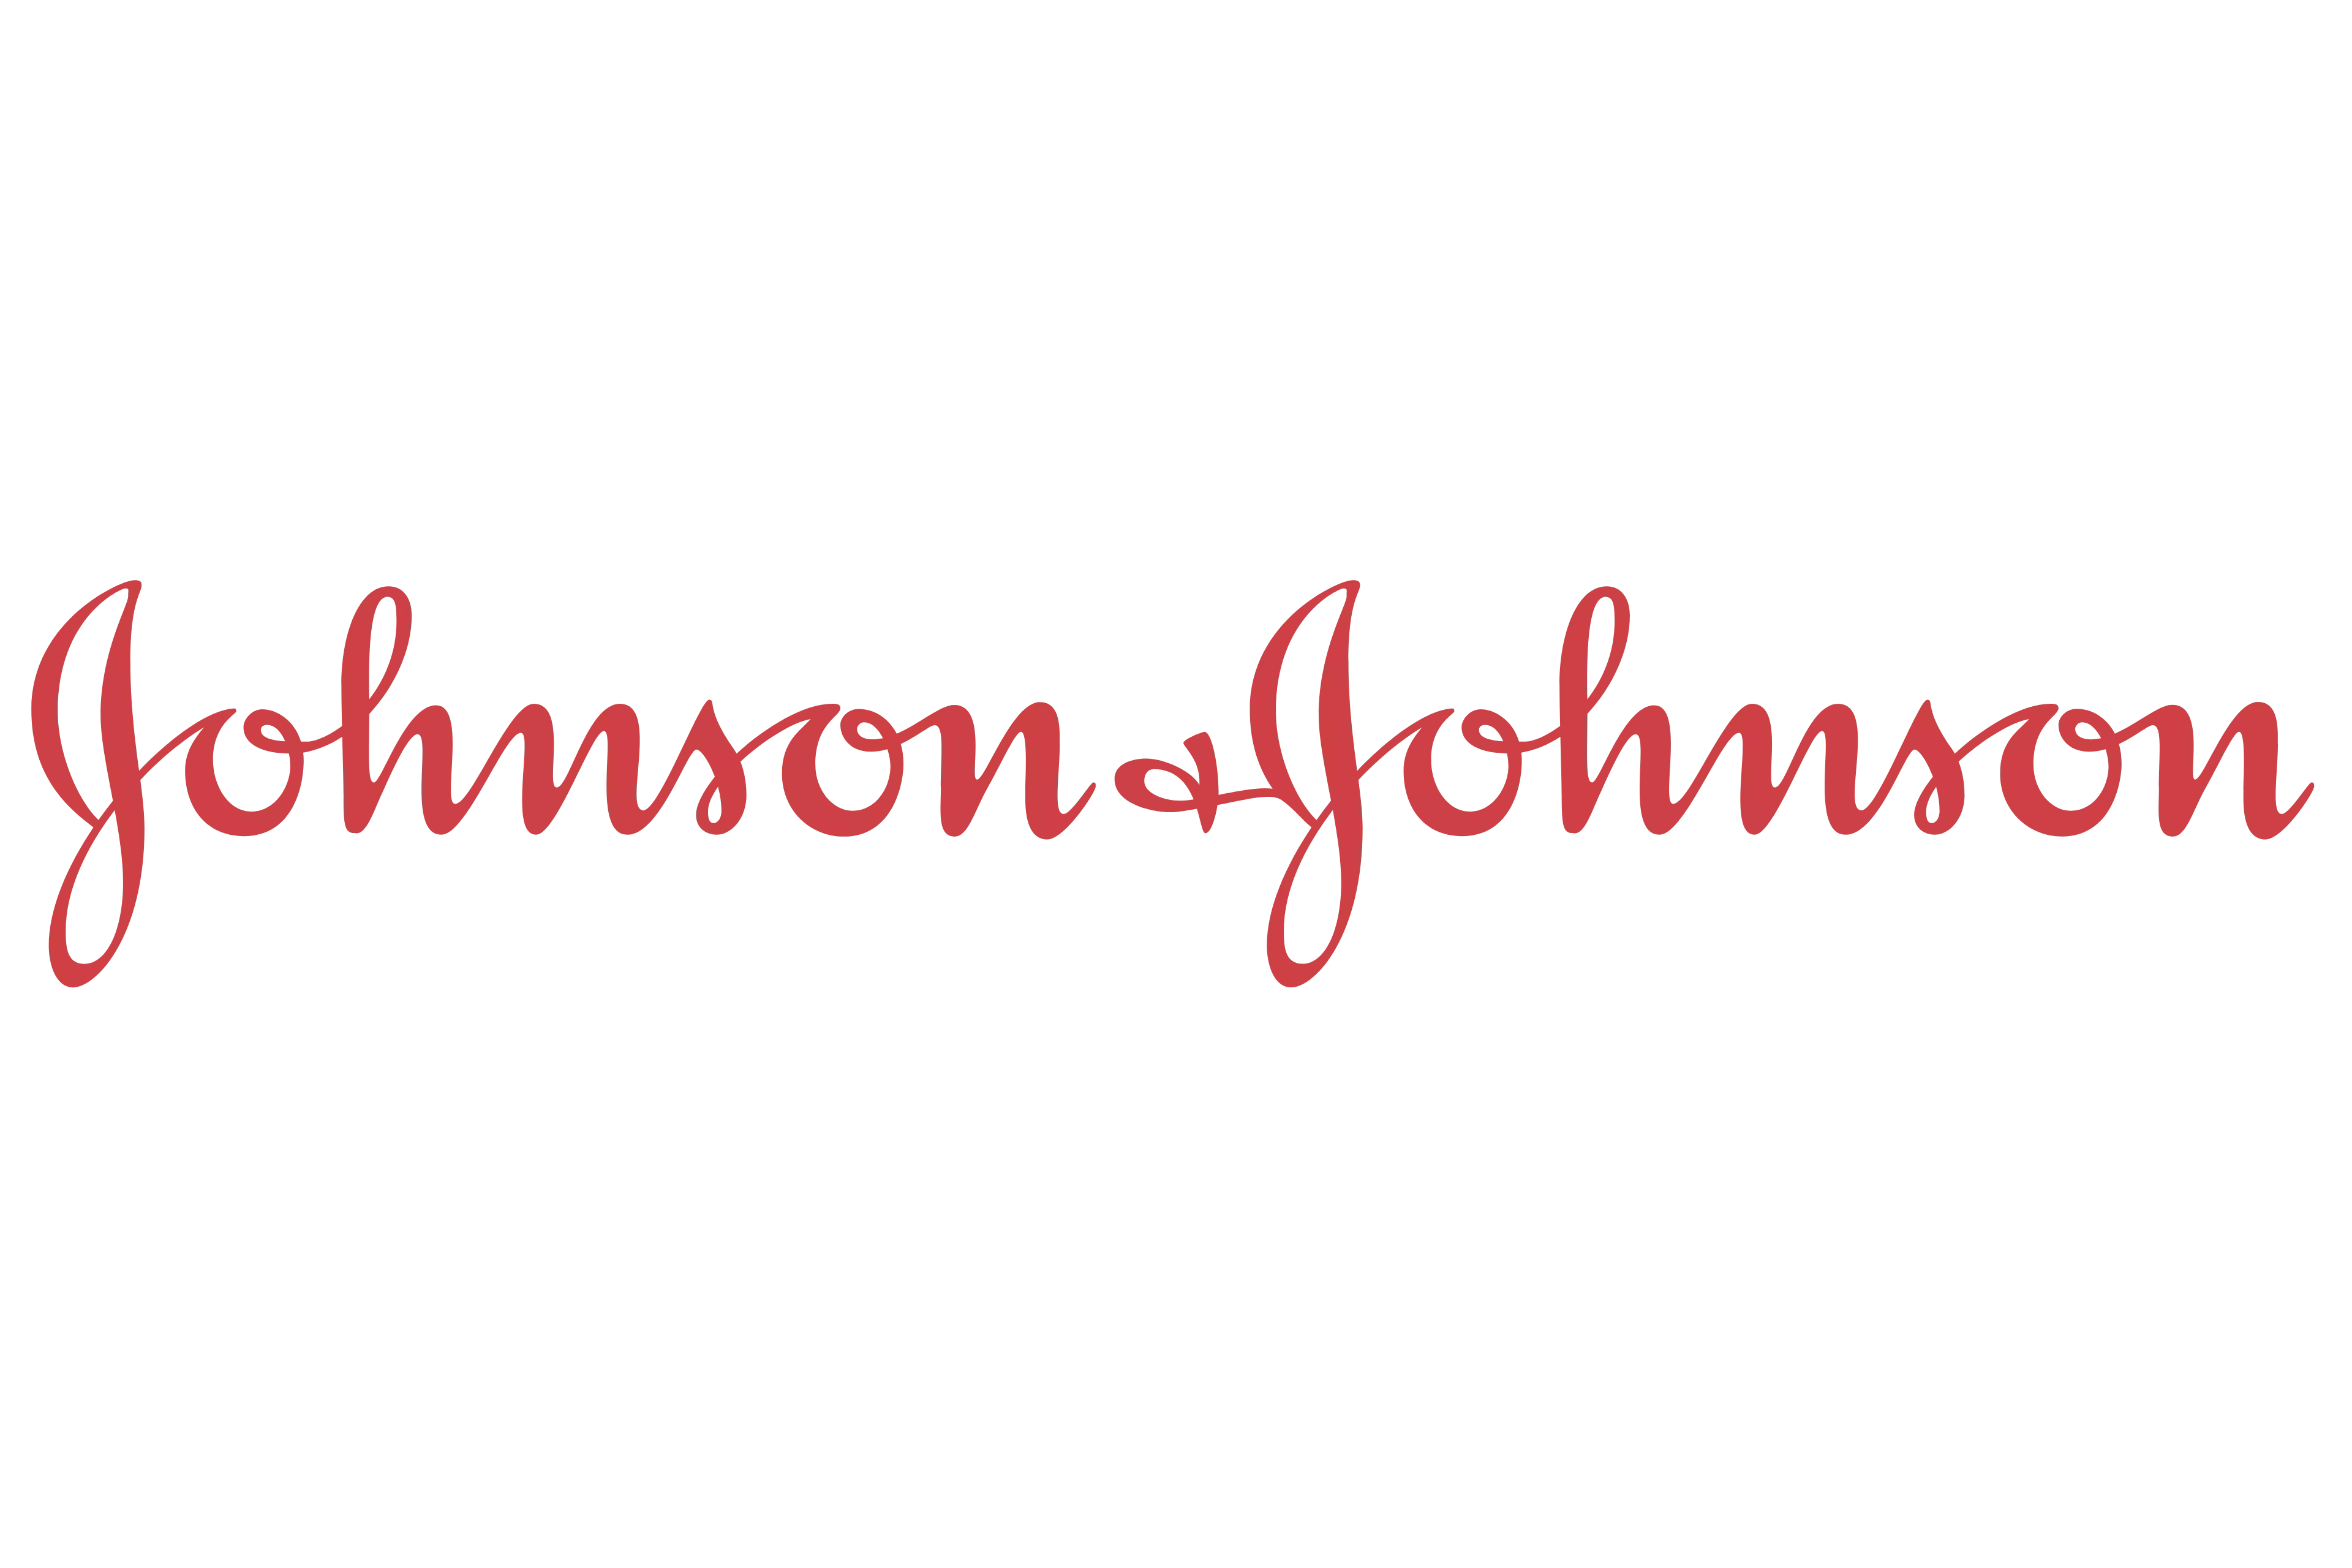 Johnson & Johnson logo